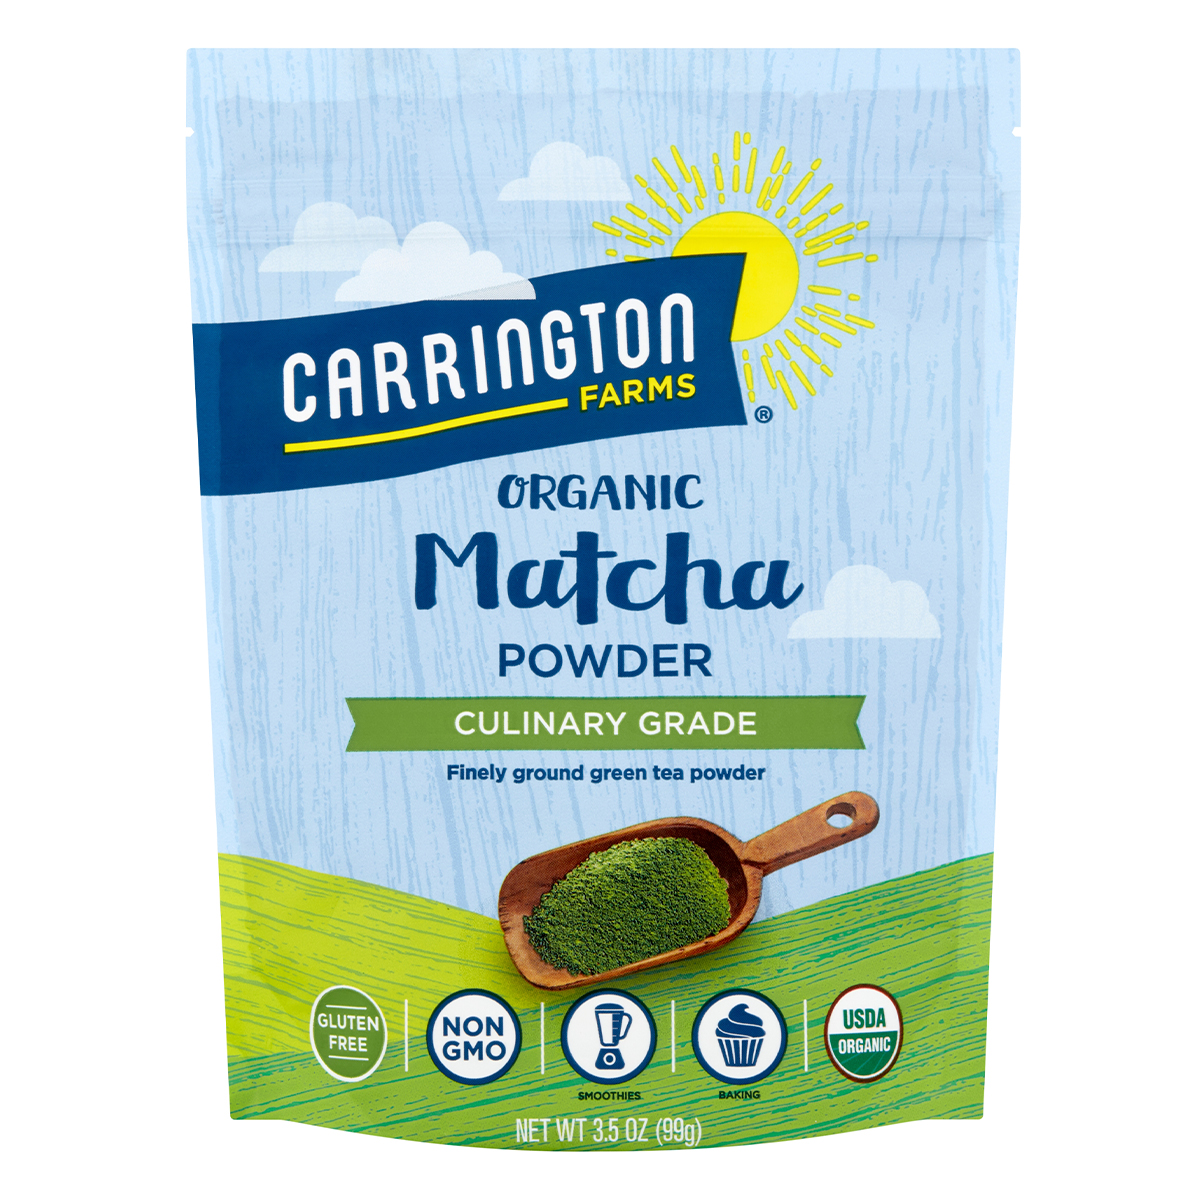 Carrington Farms + Matcha Green Tea Powder